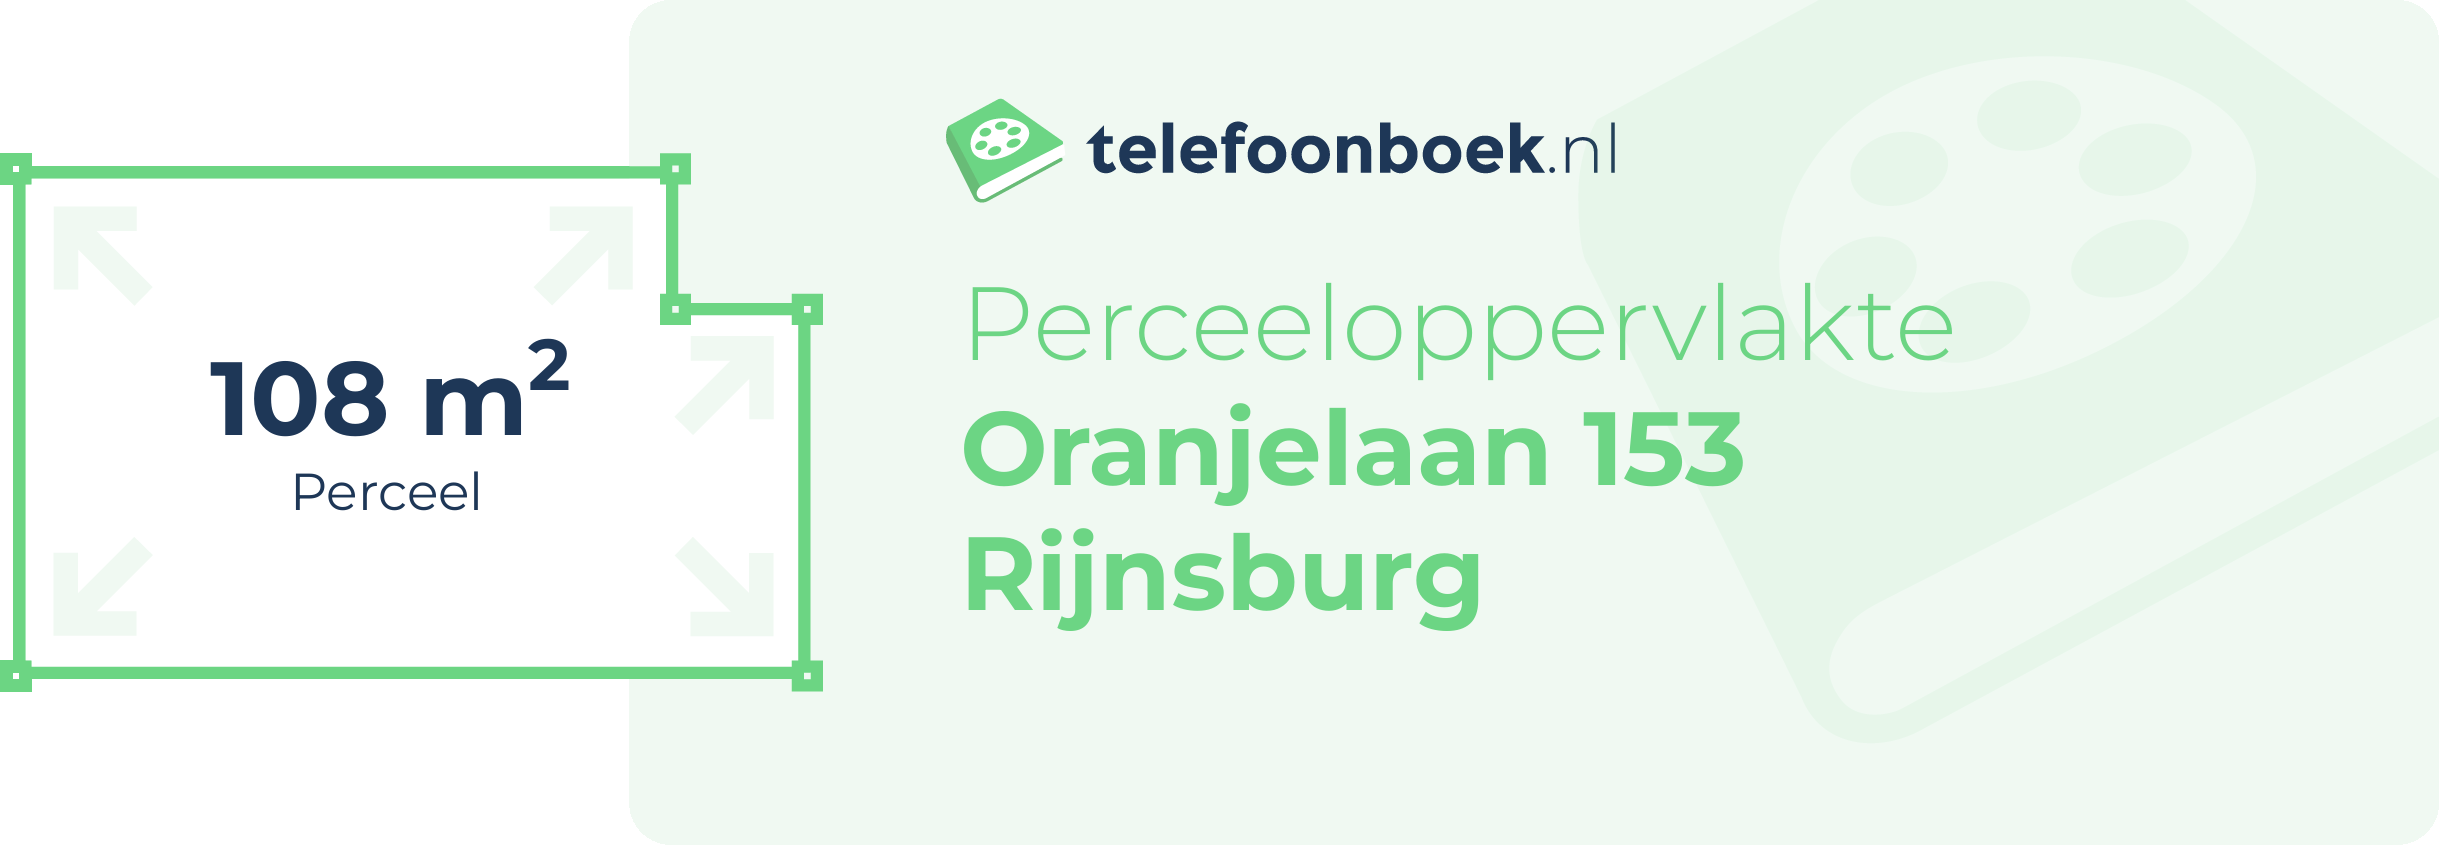 Perceeloppervlakte Oranjelaan 153 Rijnsburg